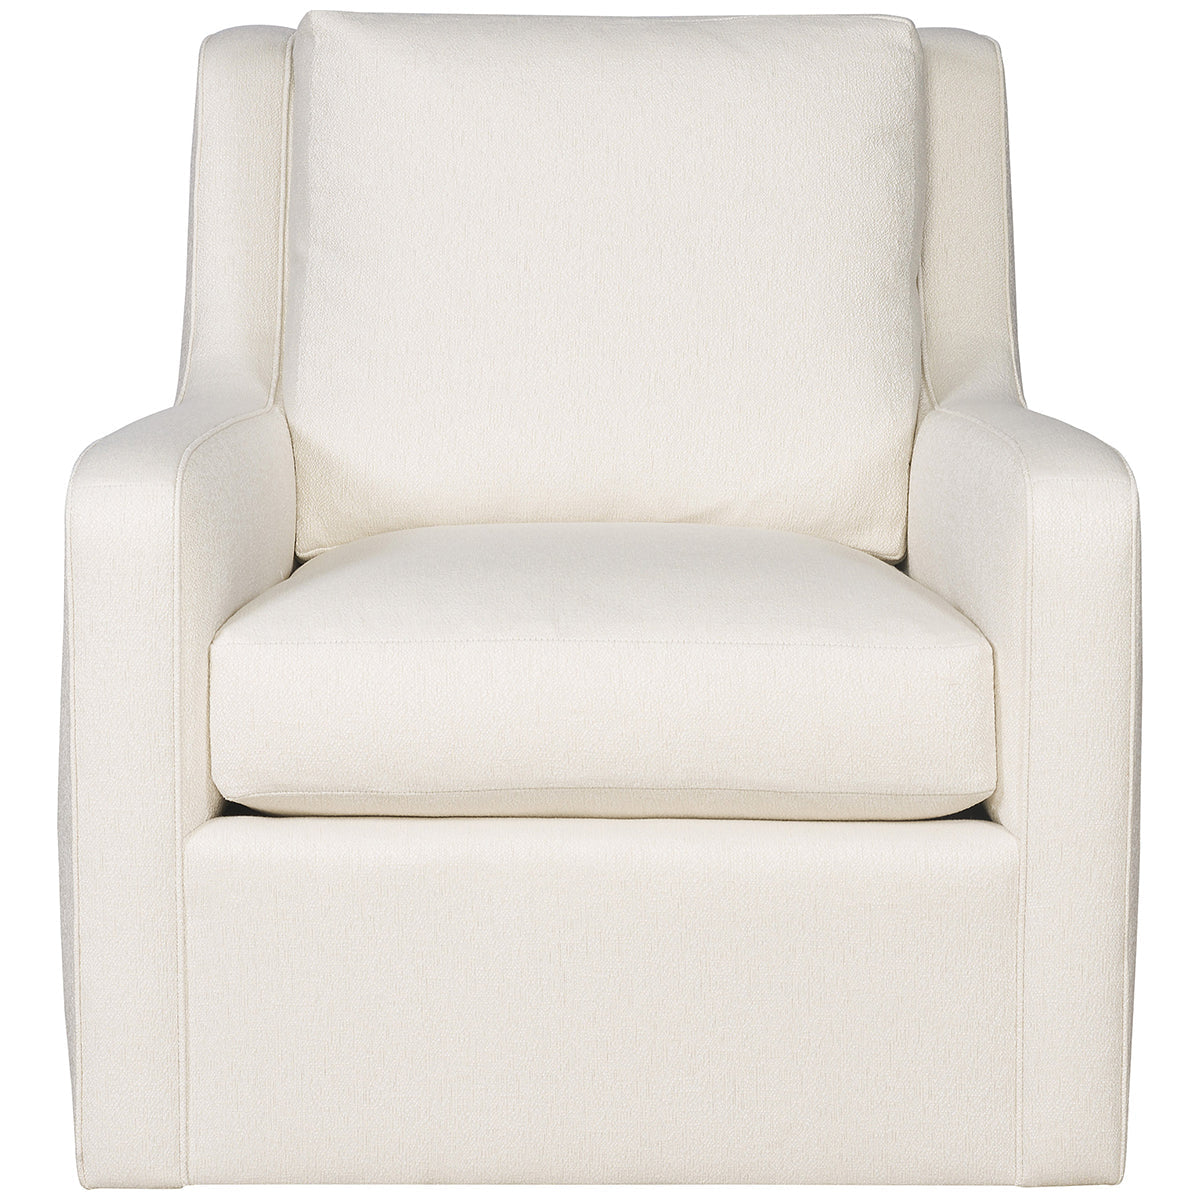 Vanguard Furniture Josie Swivel Chair